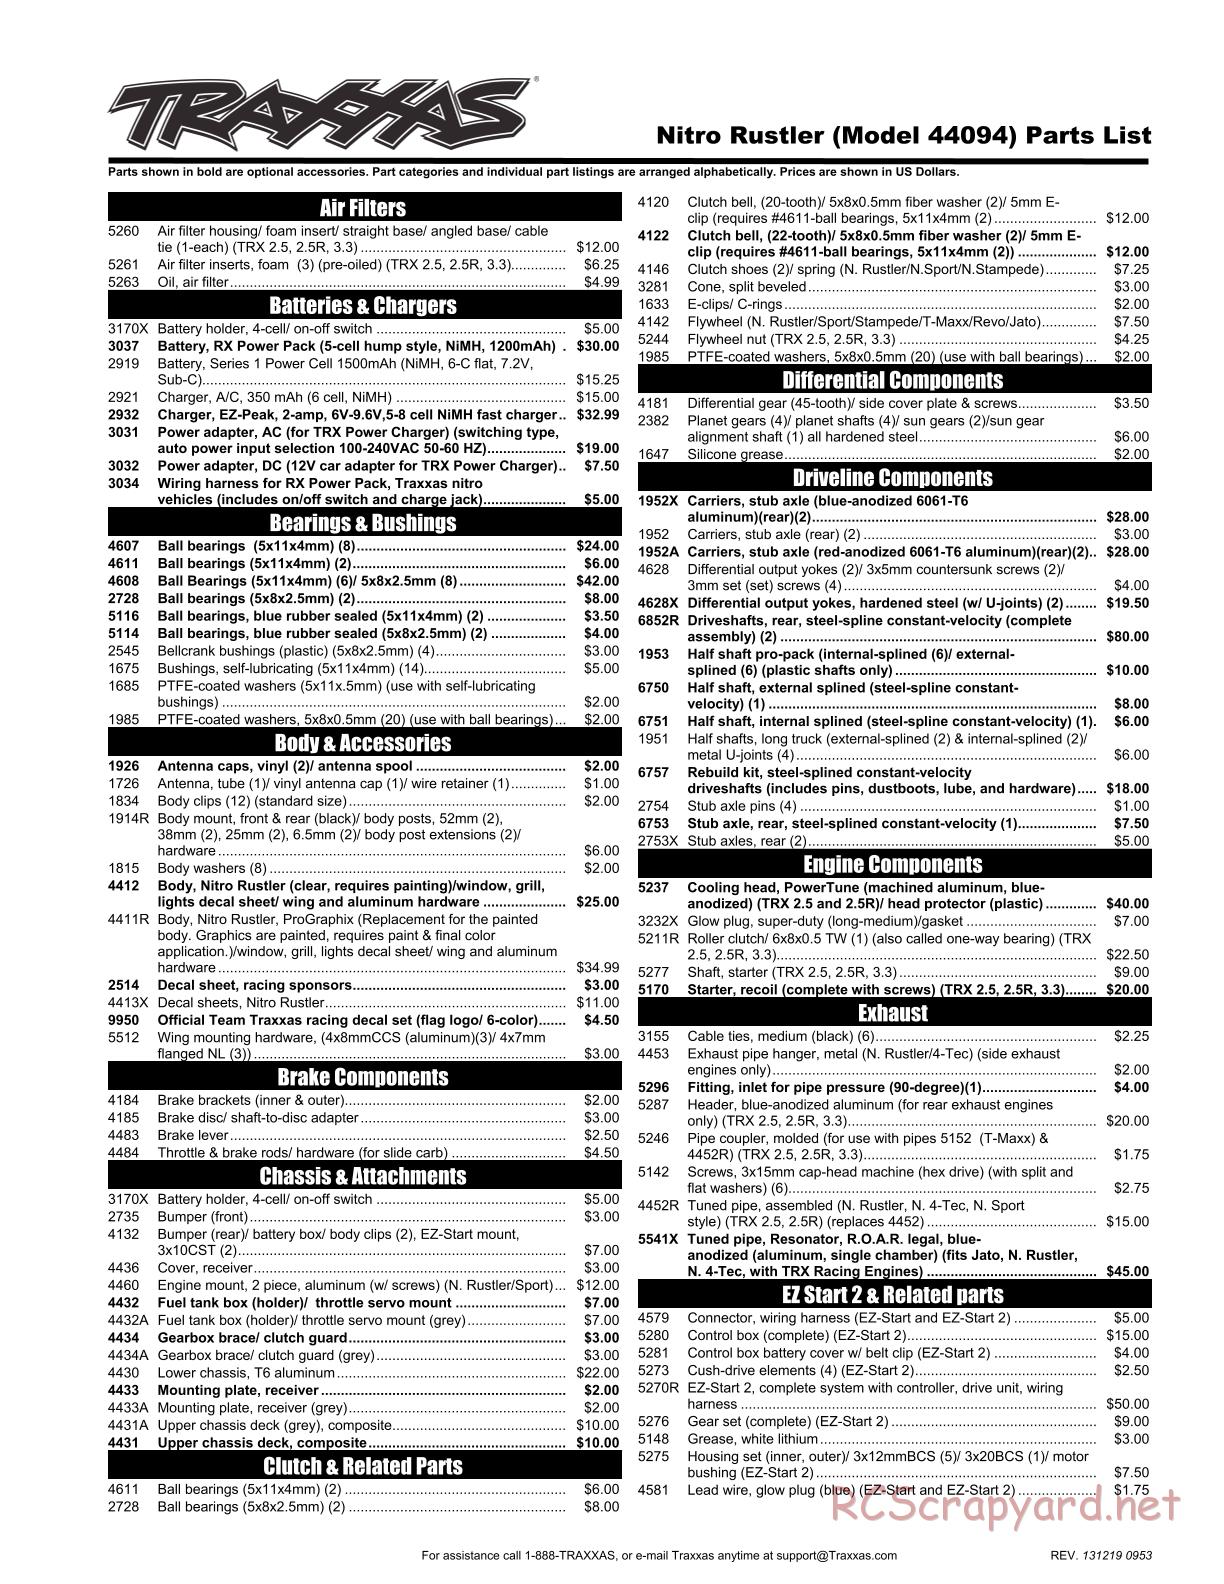 Traxxas - Nitro Rustler (2013) - Parts List - Page 1